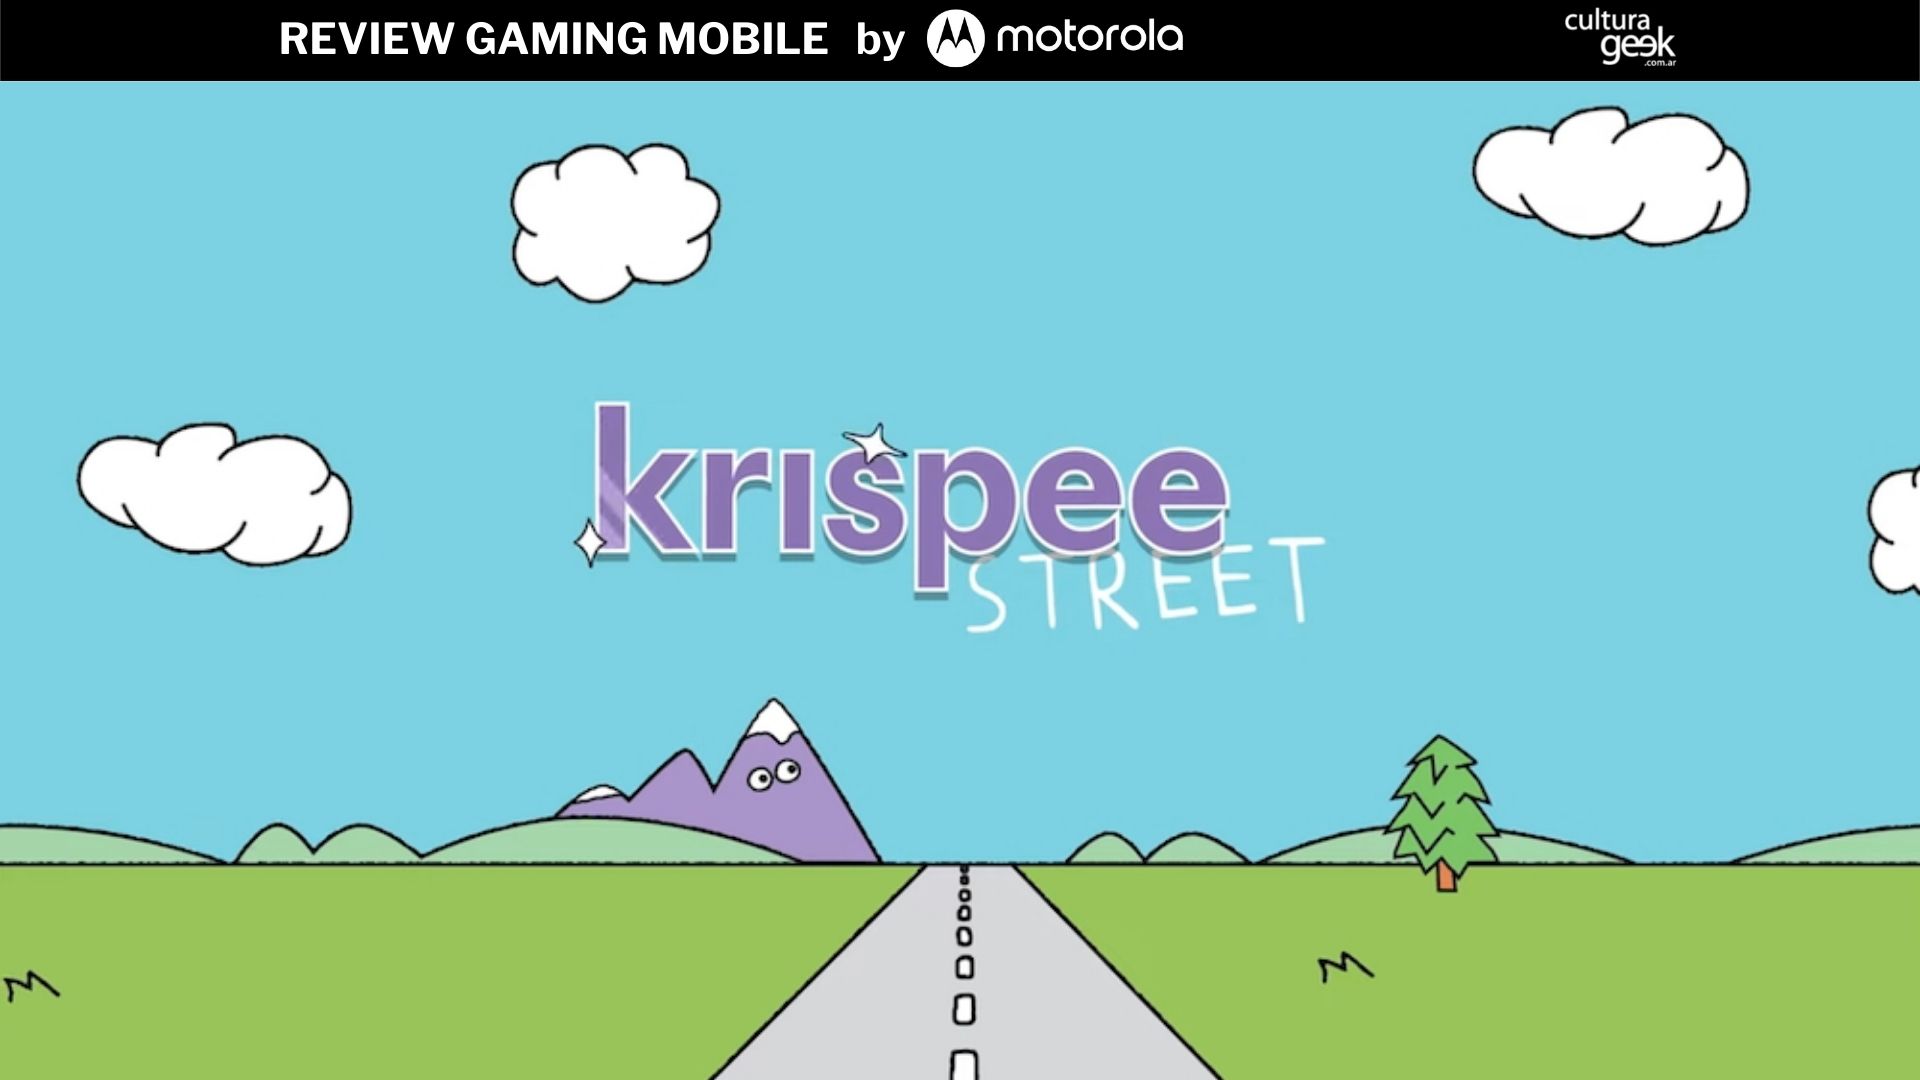 Krispee street Review